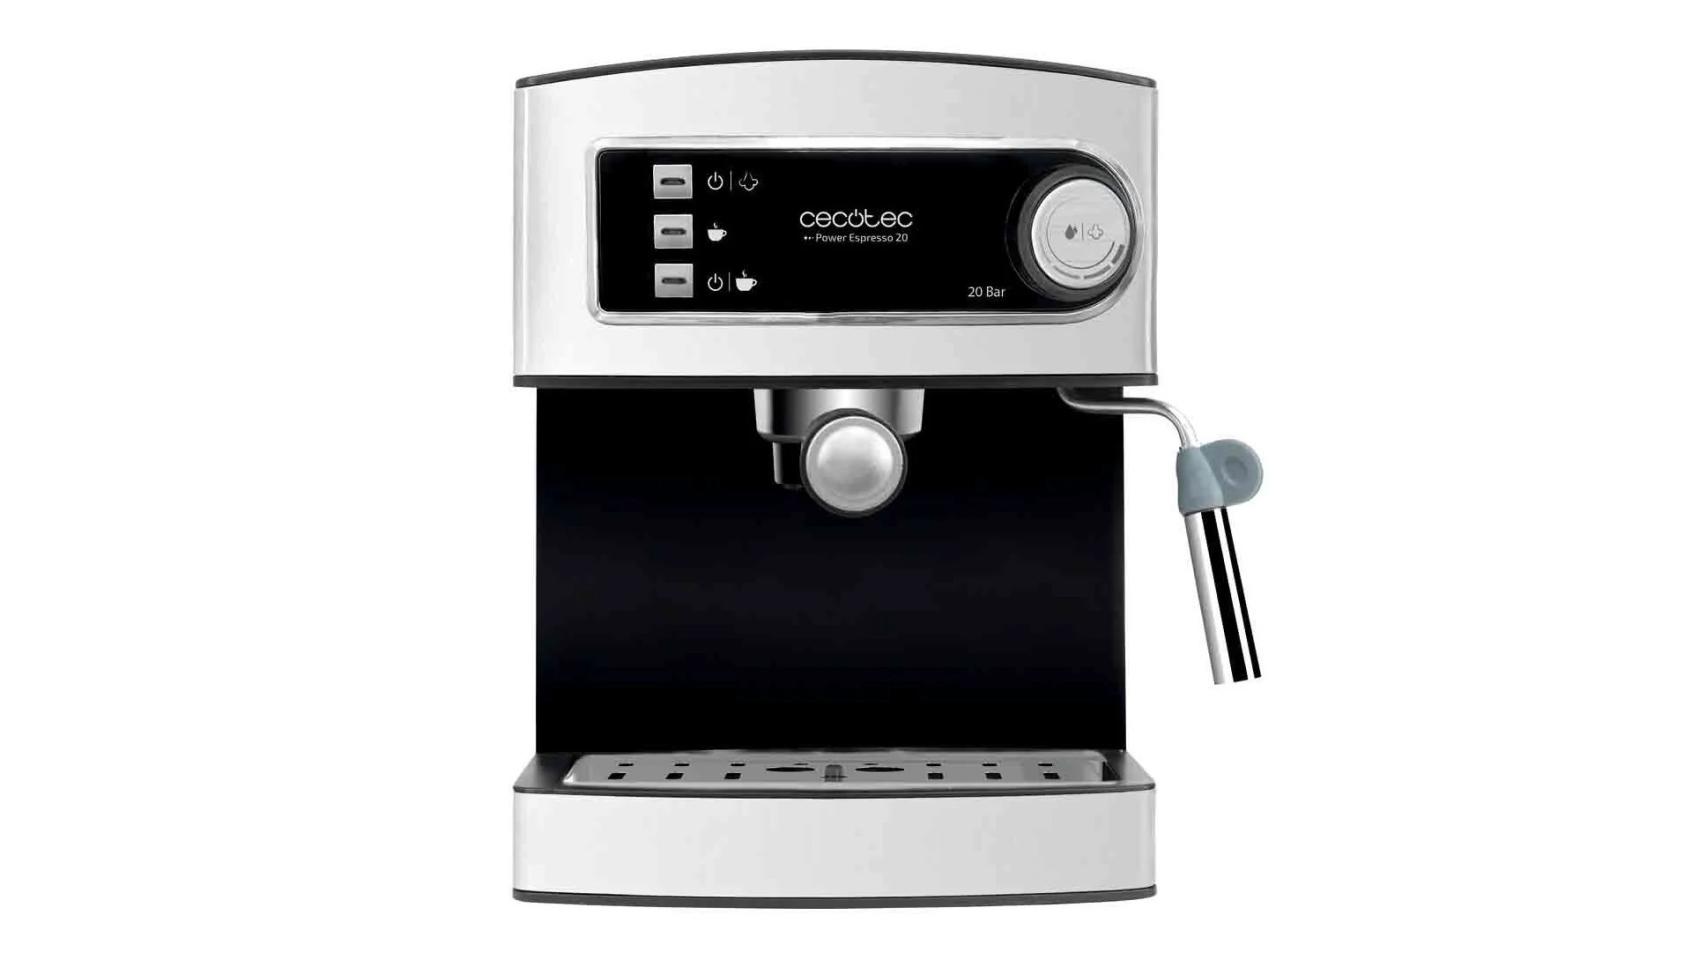 Cafetera Cecotec Power Espresso 850W